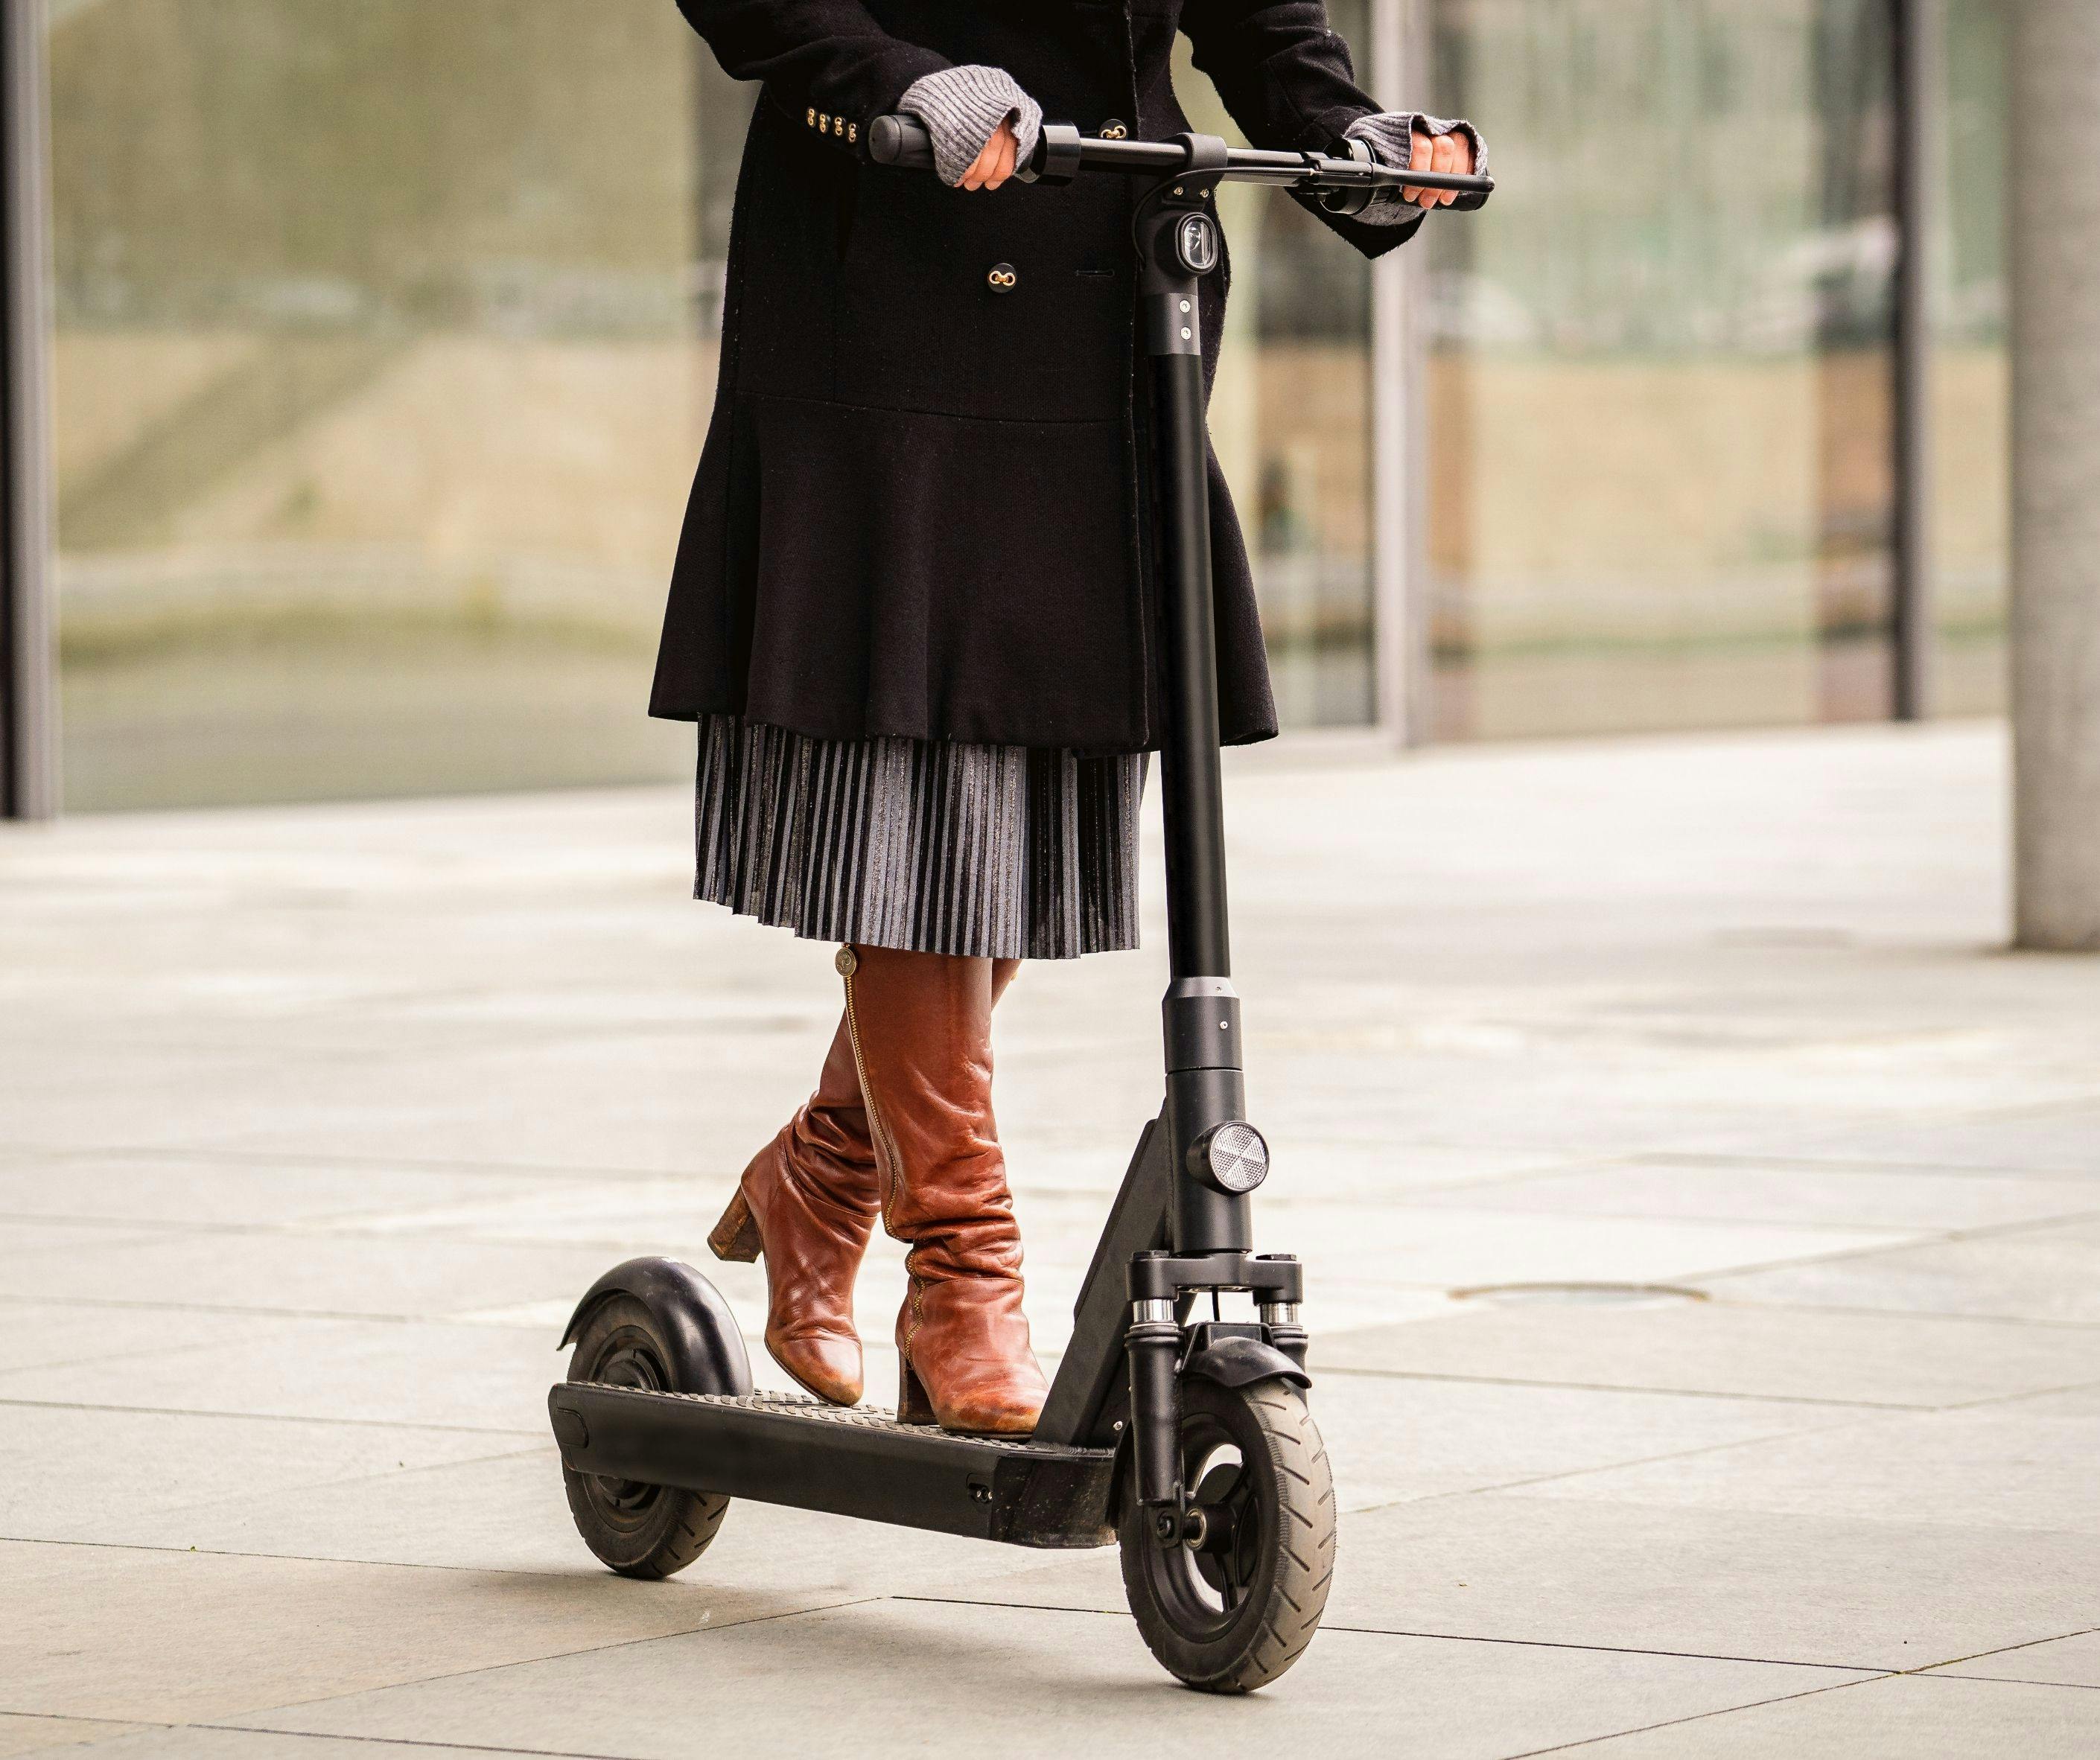 Using an e-scooter in an urban environment